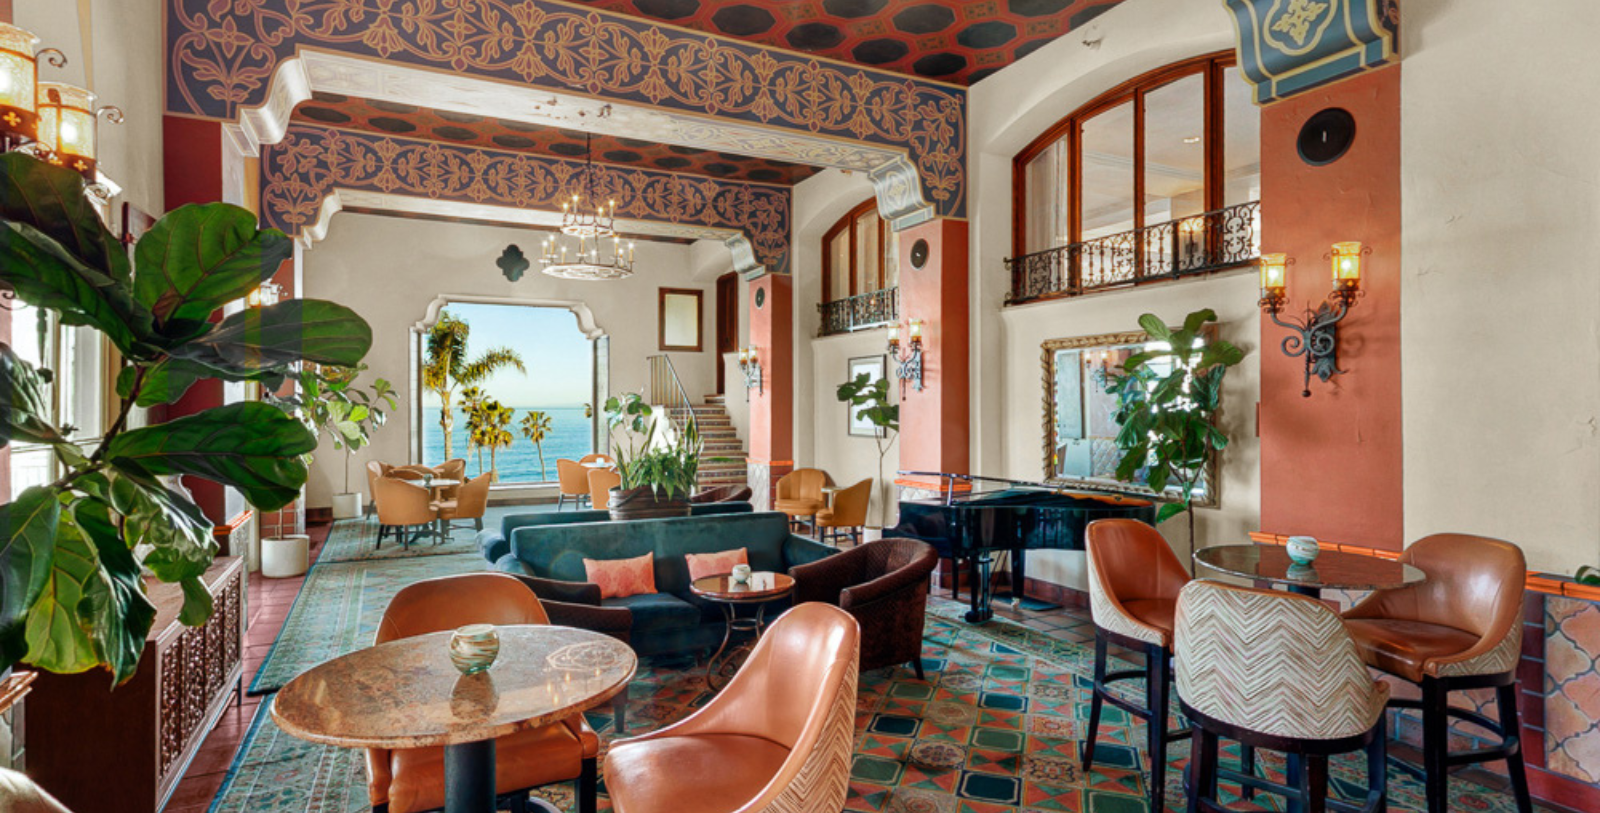 Image of THE MED Dining Room of La Valencia Hotel in La Jolla, California